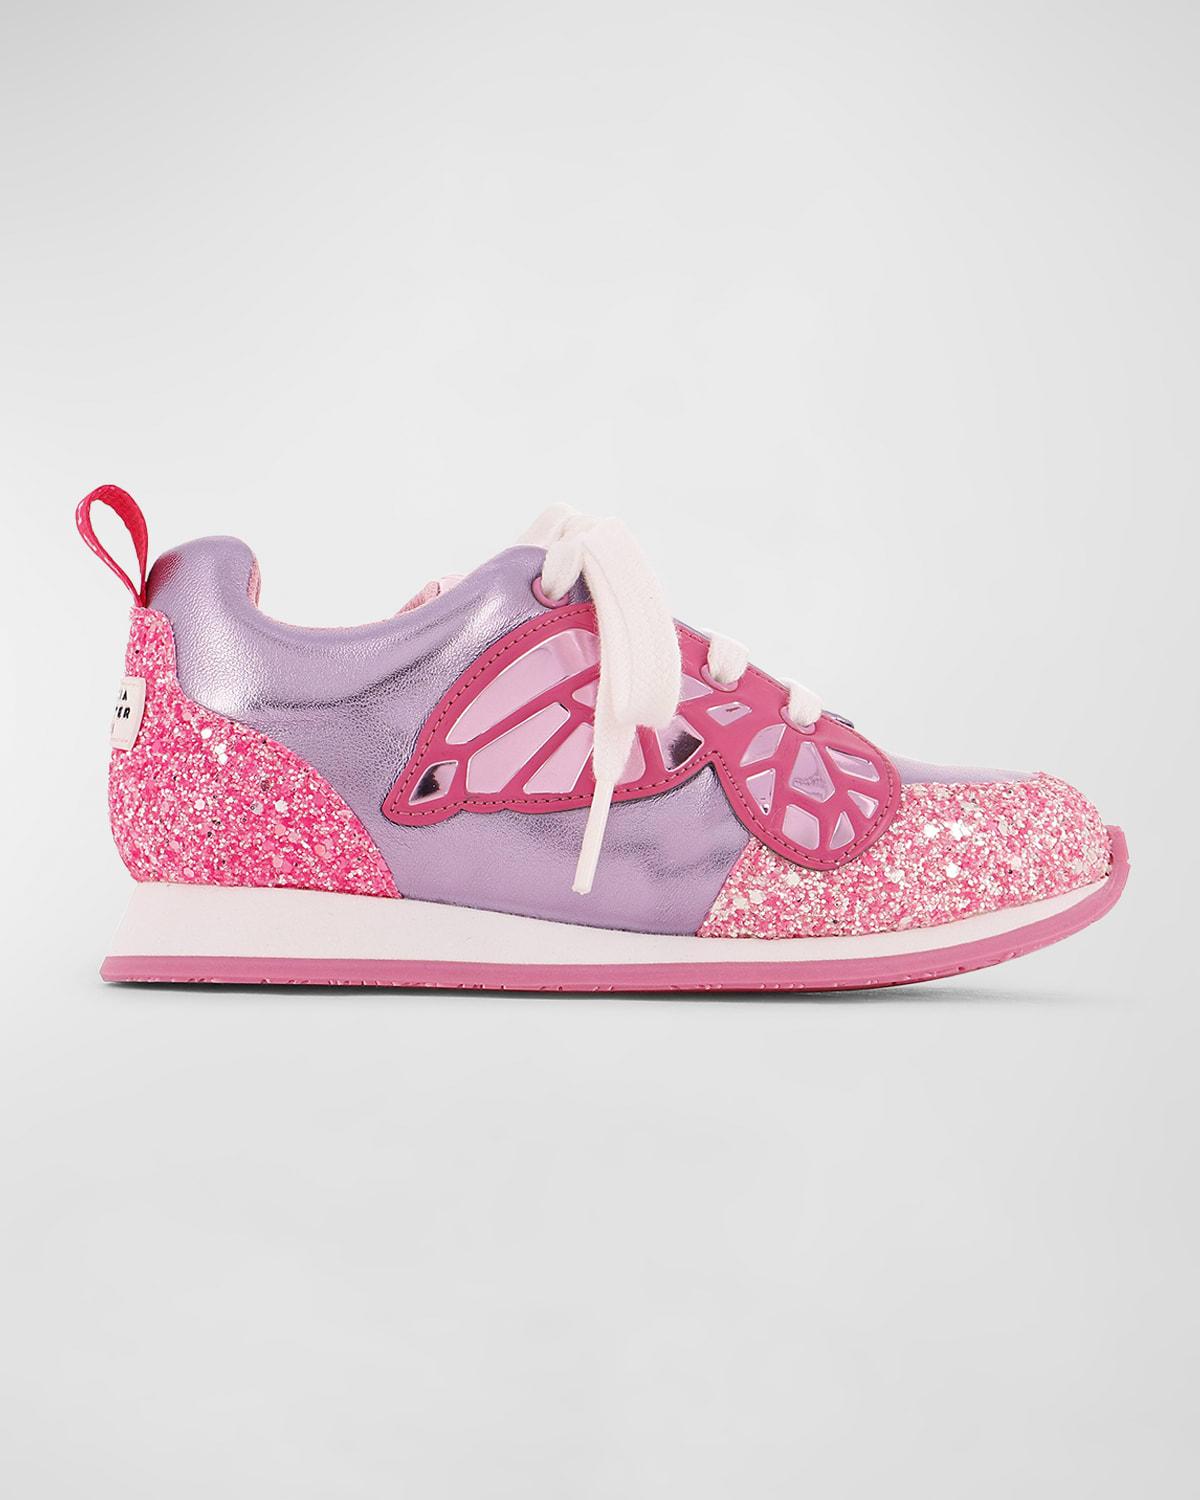 Sophia Webster Girl's Chiara Butterfly Sneakers, Baby/toddlers/kids In Pink Punch